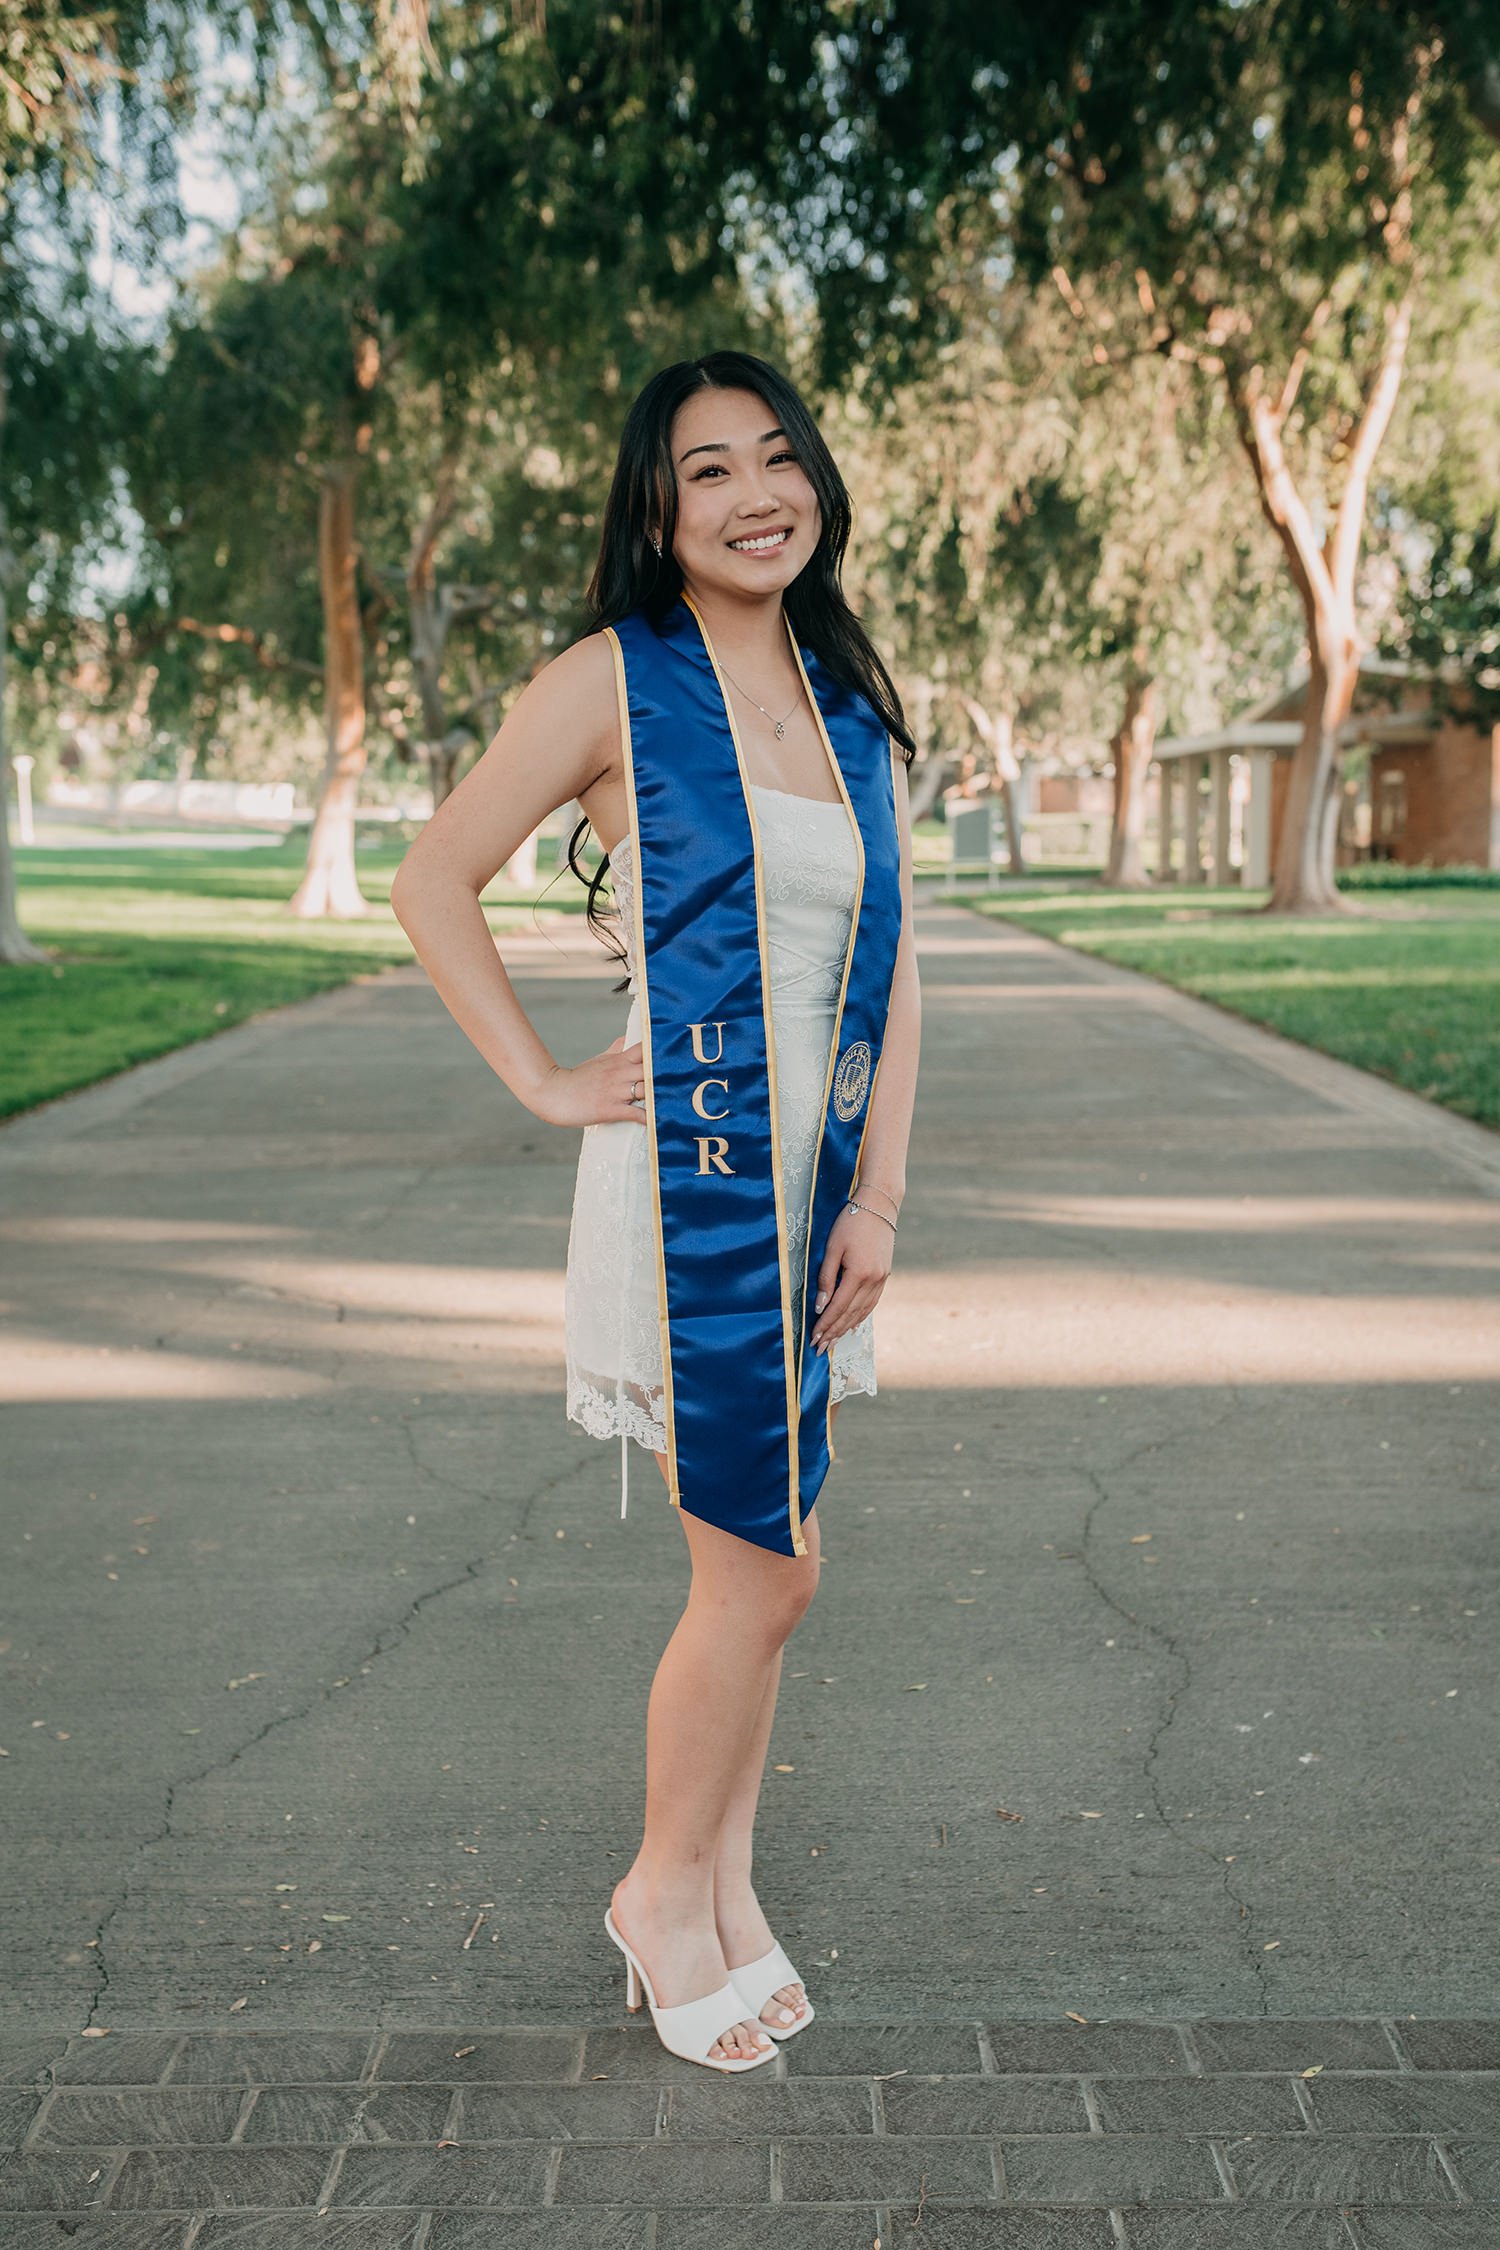 ucr-graduation-portrait-riverside-california-photographer-2.jpg